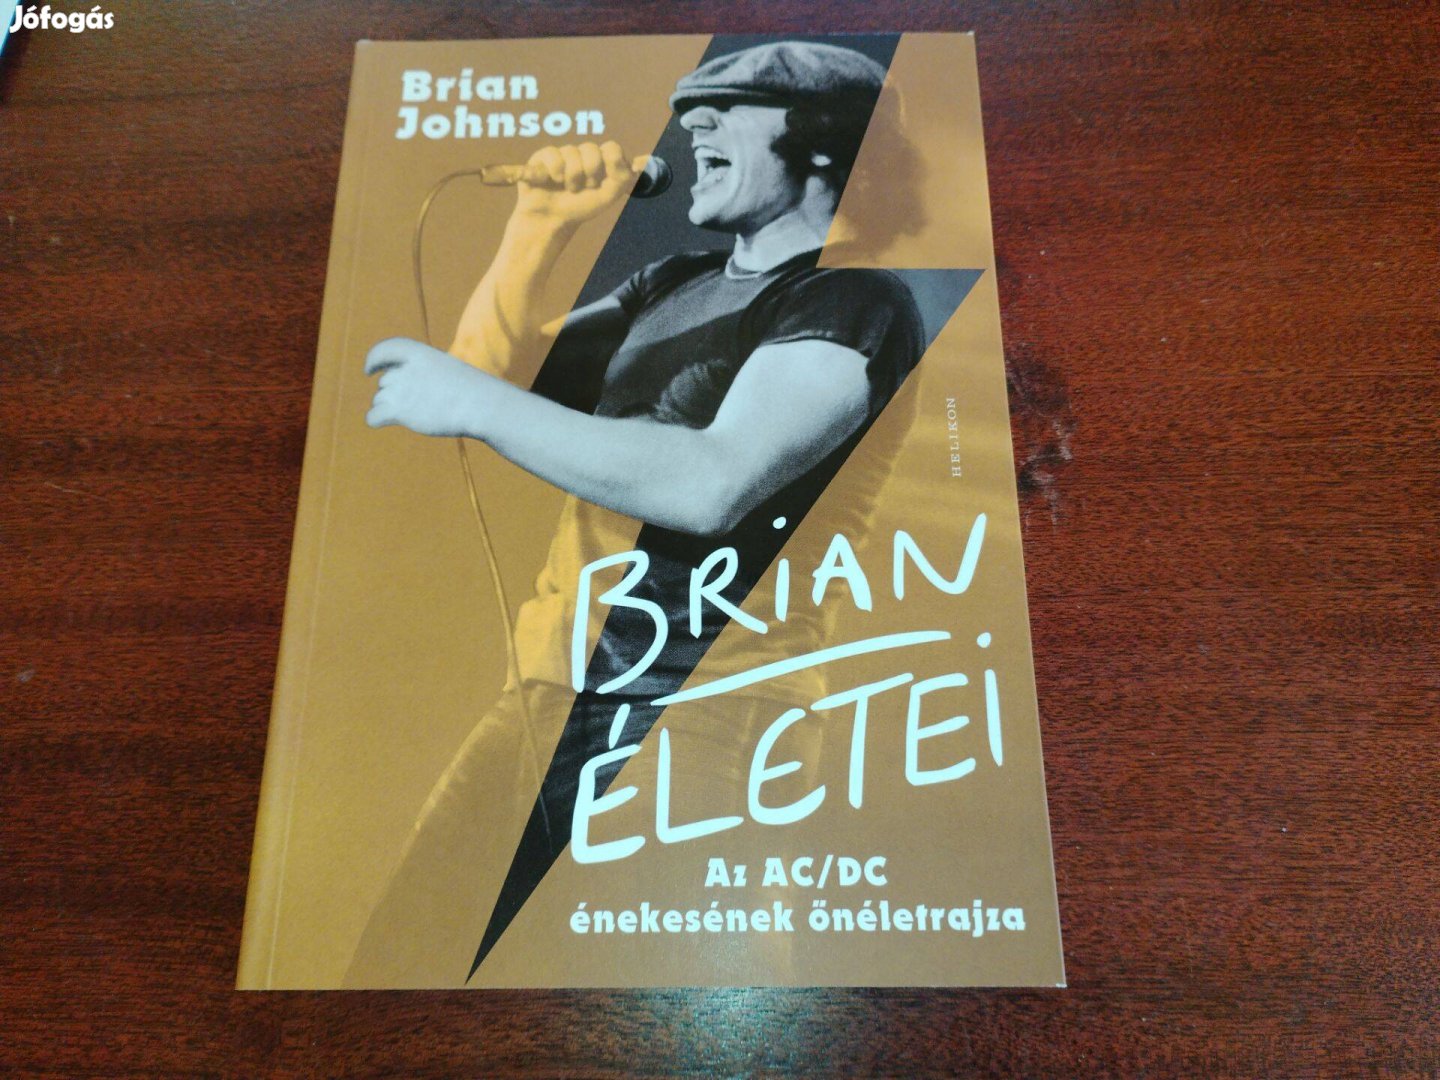 Brian élete - AC/DC